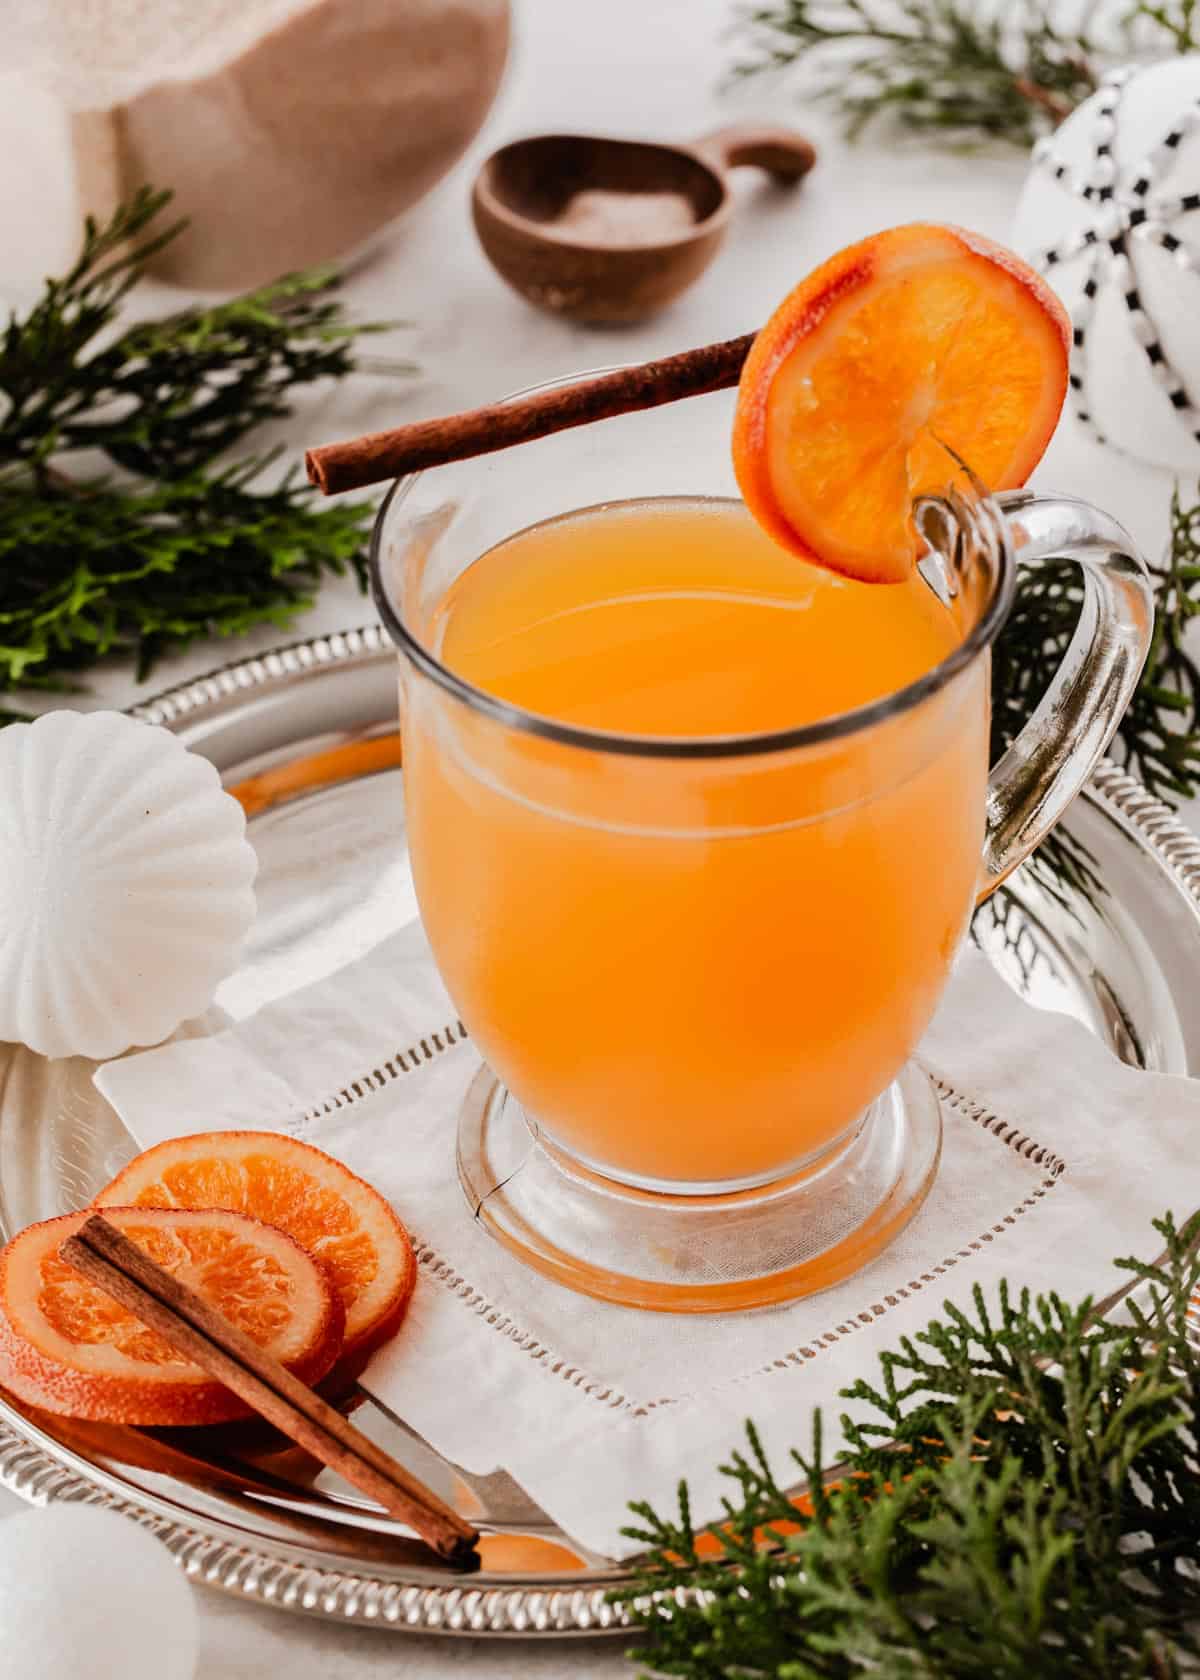 orange drink in glass mug garnished with cinnamon stick and orange wheel.